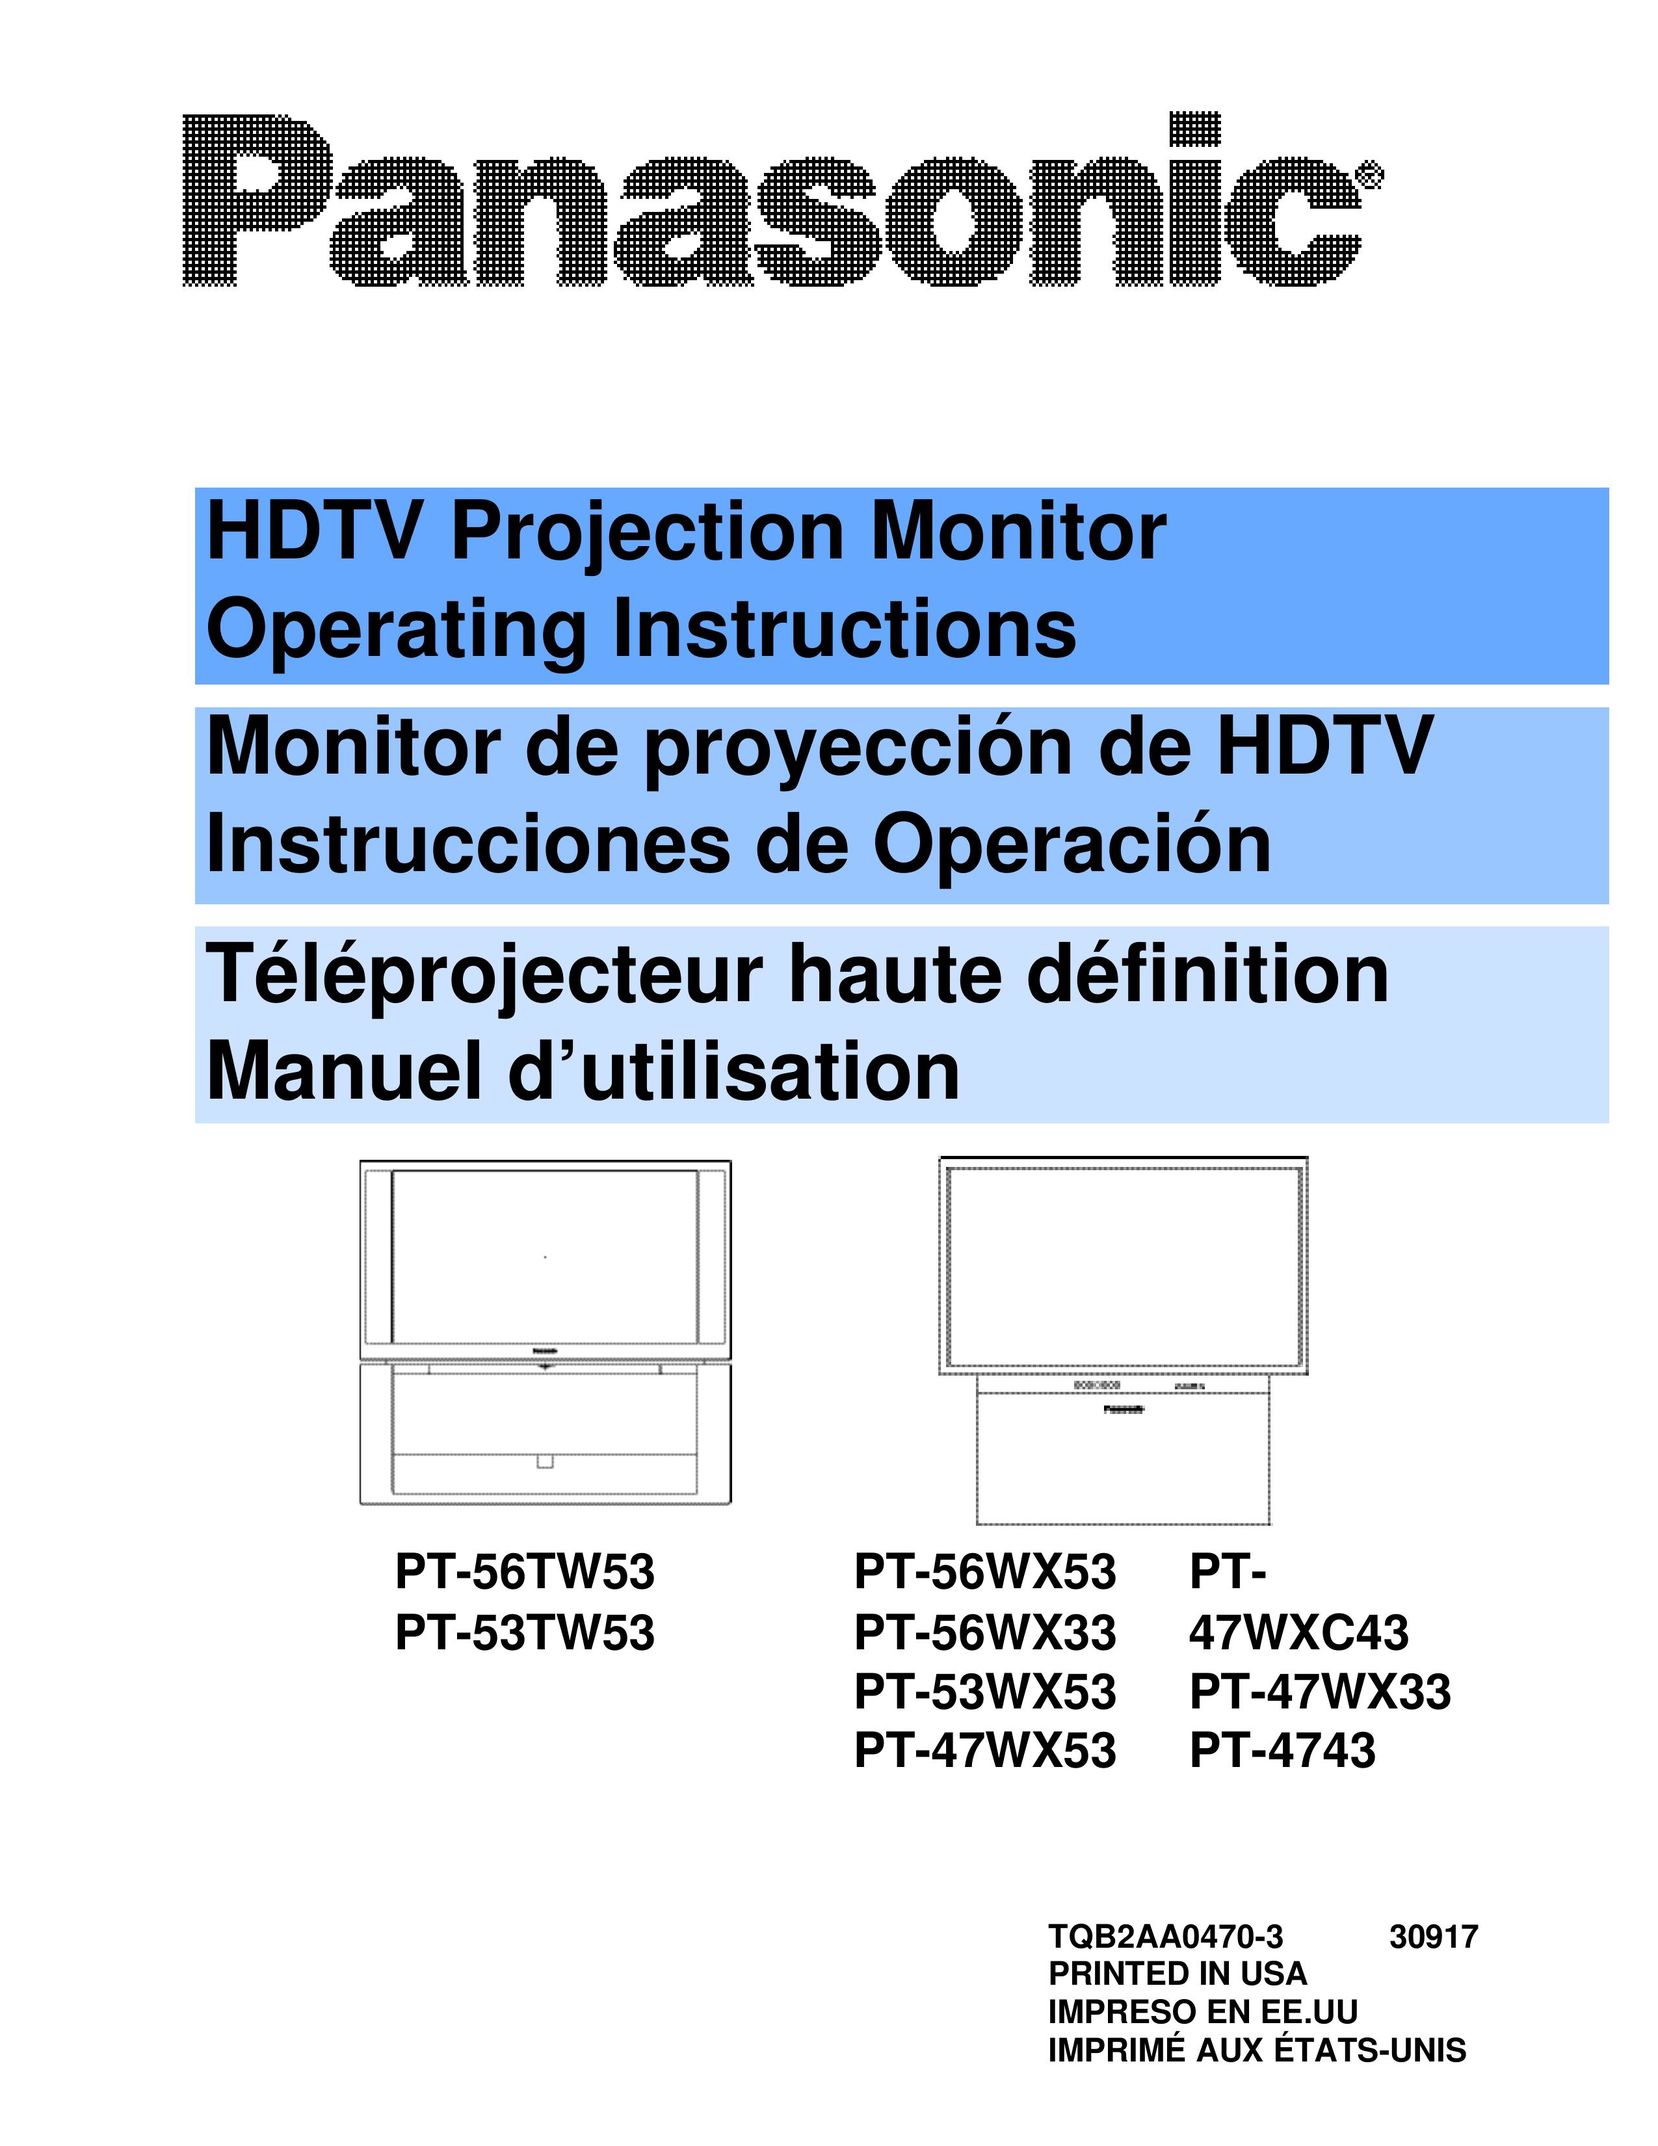 Panasonic PT-4743 Home Theater System User Manual